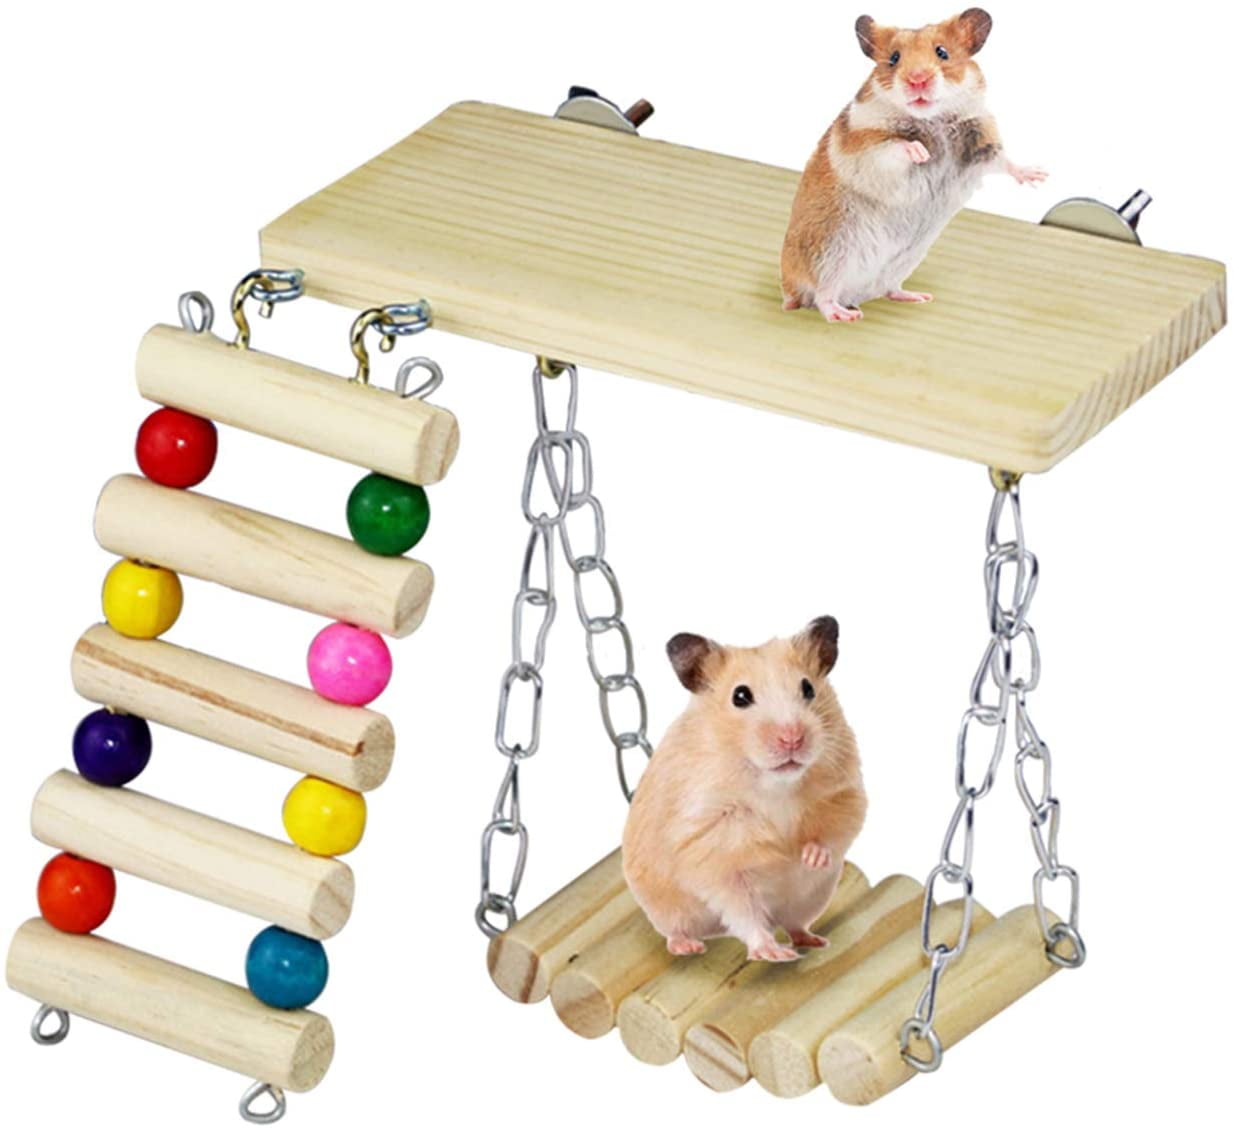 Hamster Bird Platform Wooden Stand Shelf Laddered Platform Small Animal Supplies 